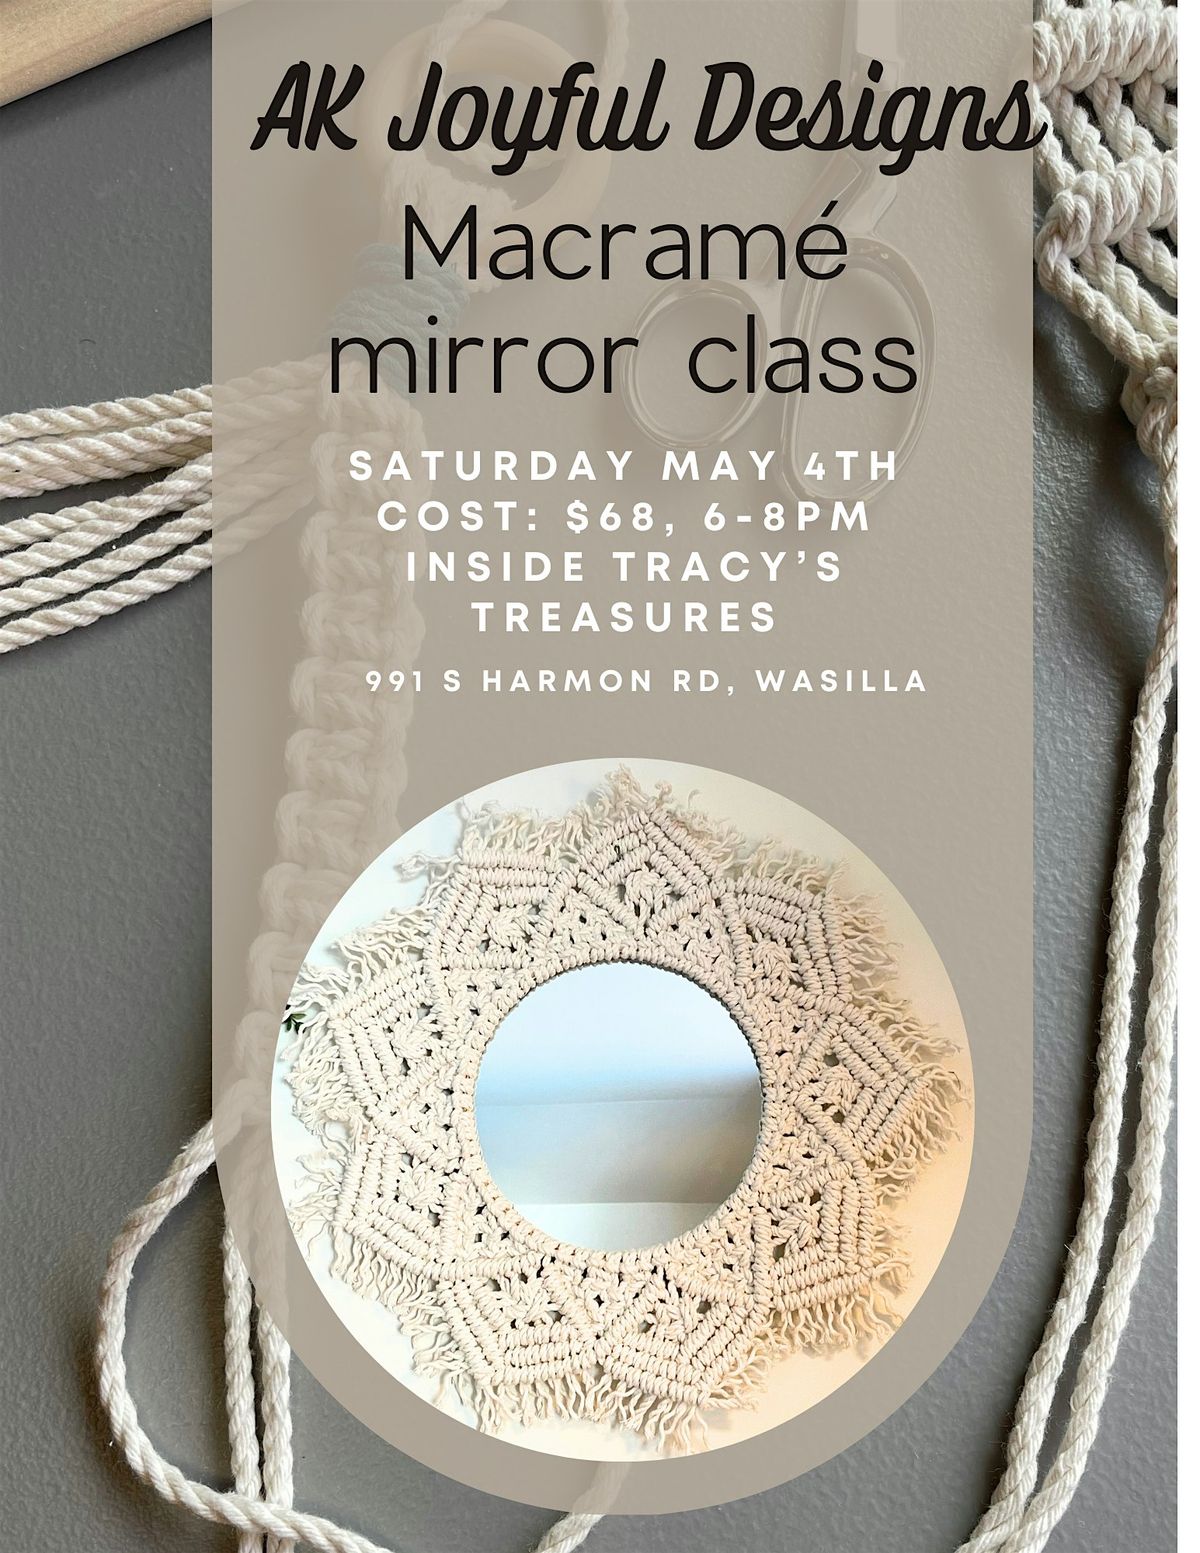 Macram\u00e9 Mirror Class with AK Joyful Designs